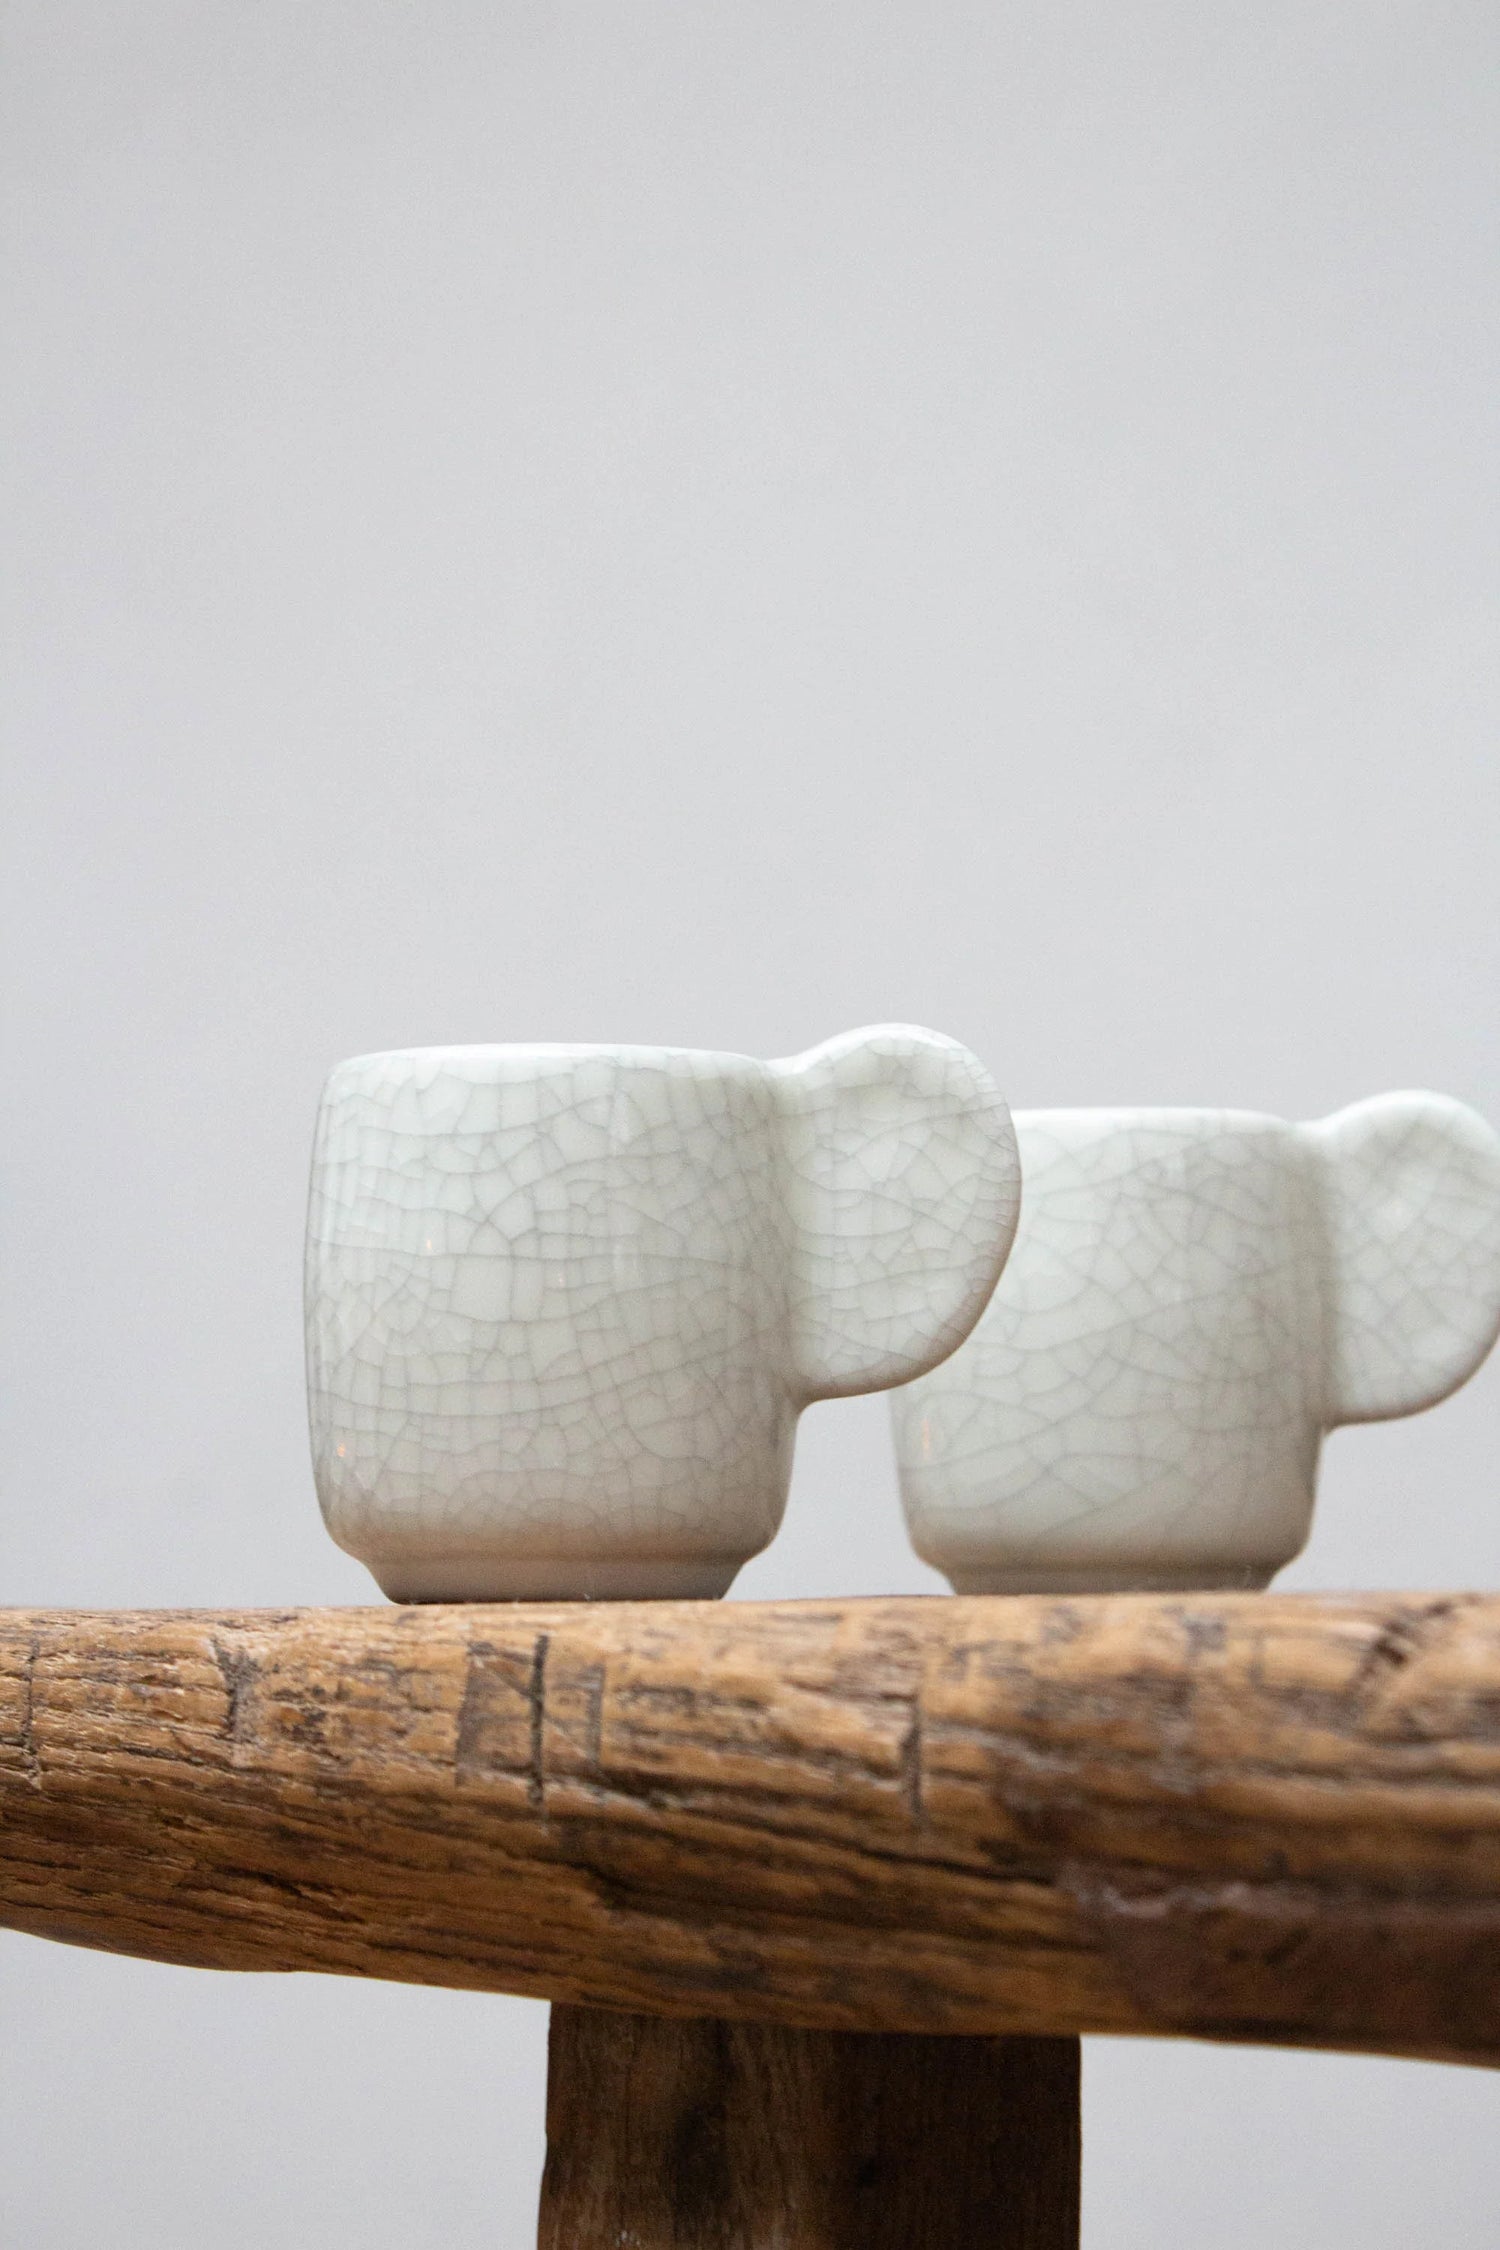 Ceramic mugs set on wooden table.